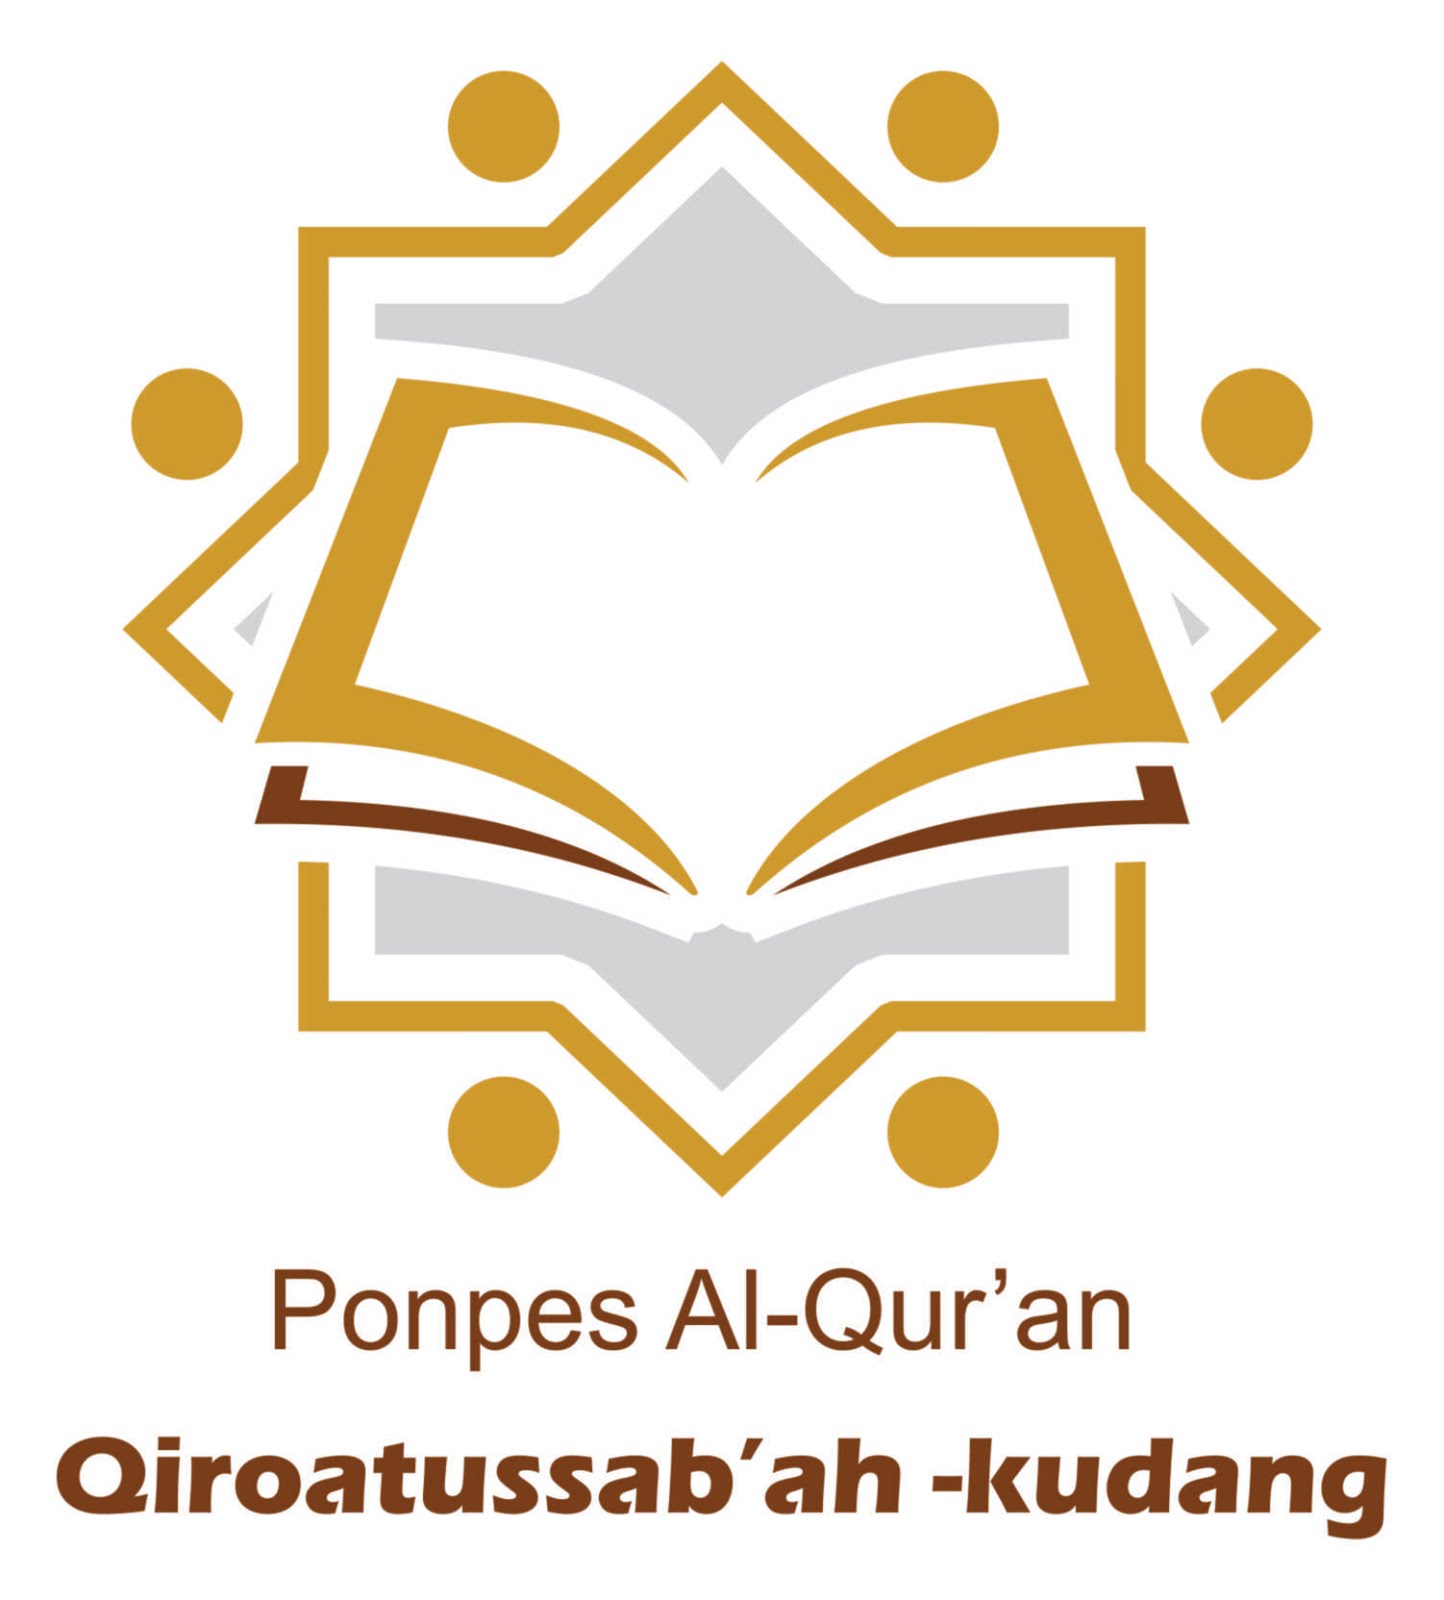 Ponpes Al-Qur'an Qiroatussab'ah - Kudang